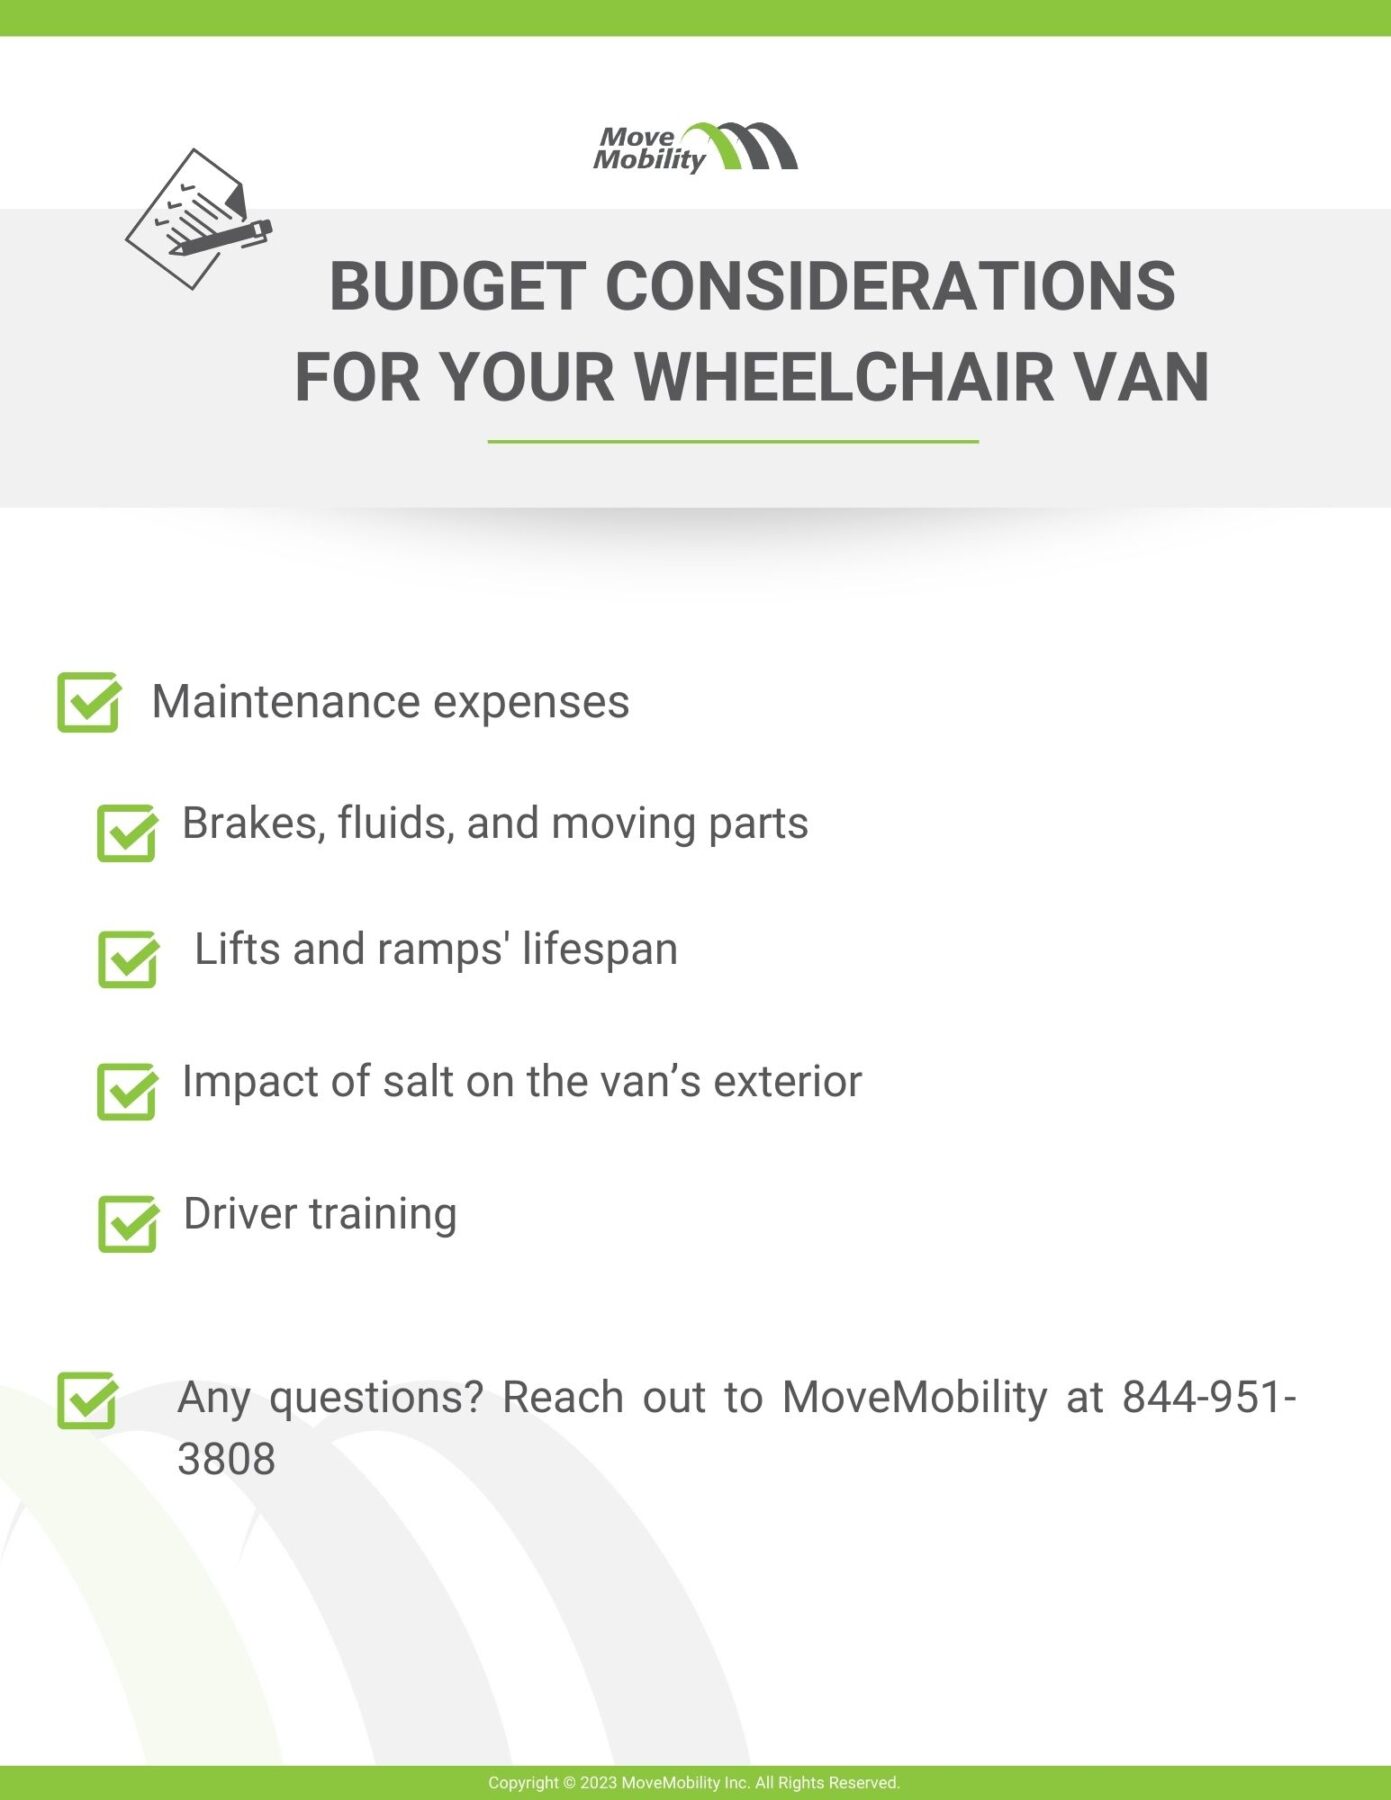 Things to keep in mind with wheelchair van maintenance